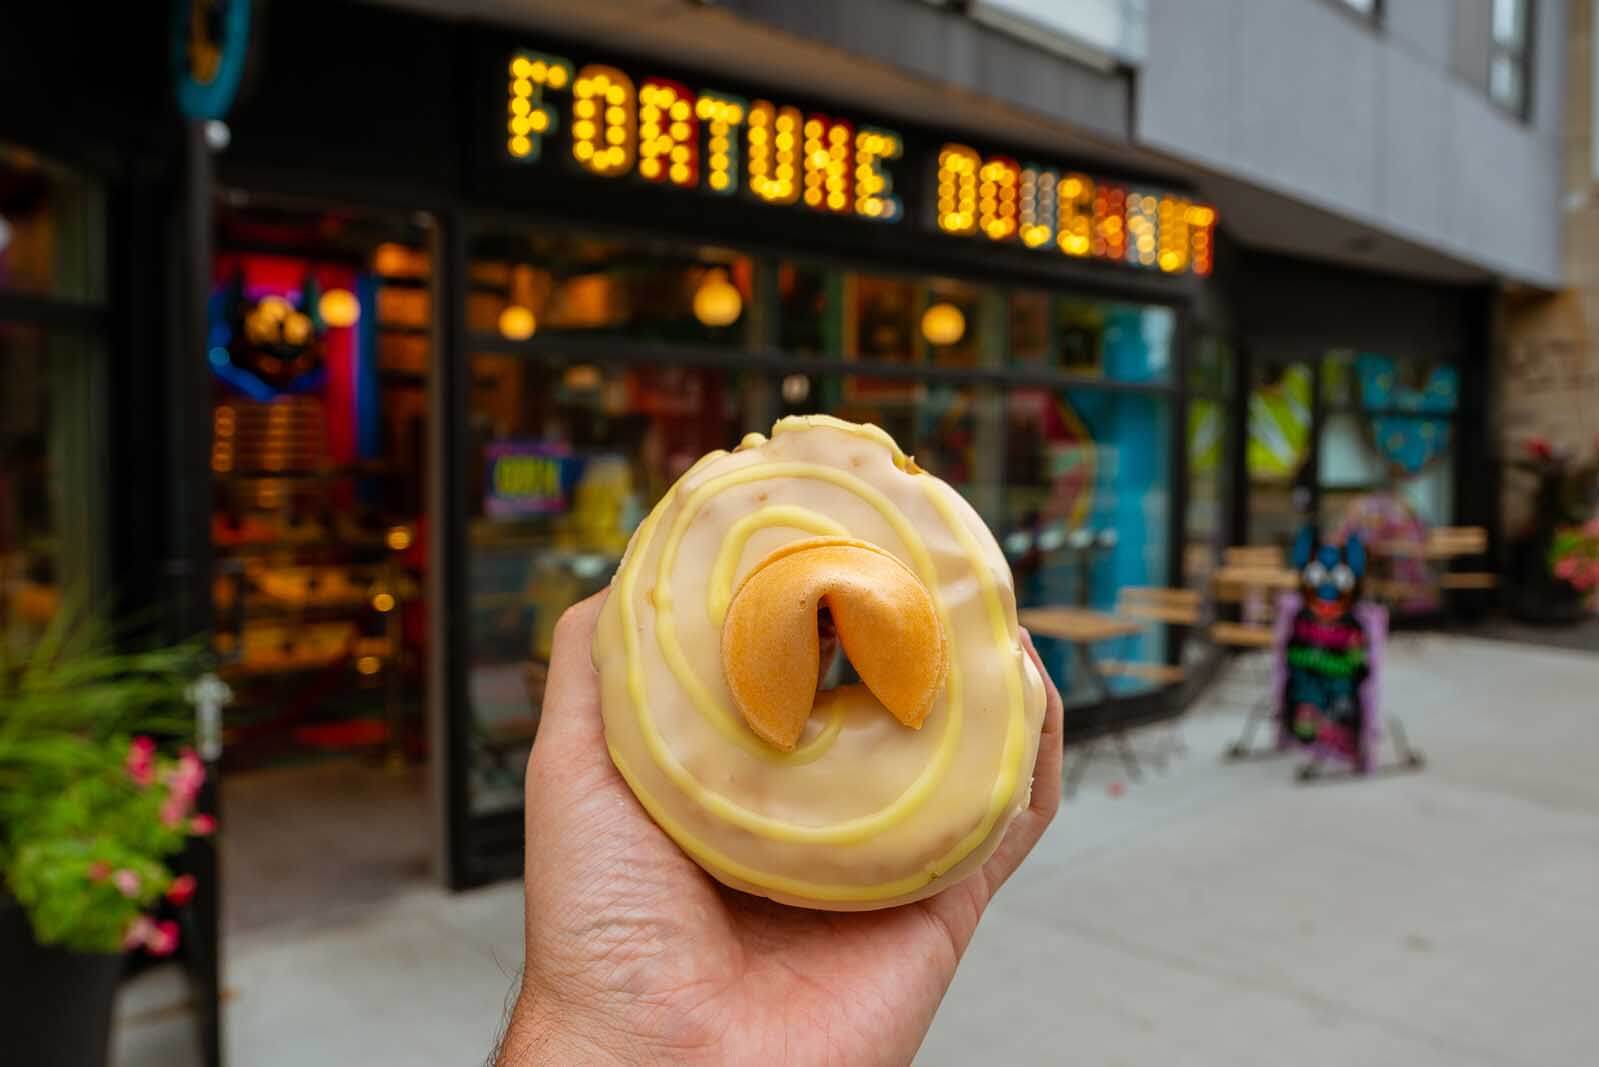 Fortune cookie donut at Fortune Doughnut in Halifax